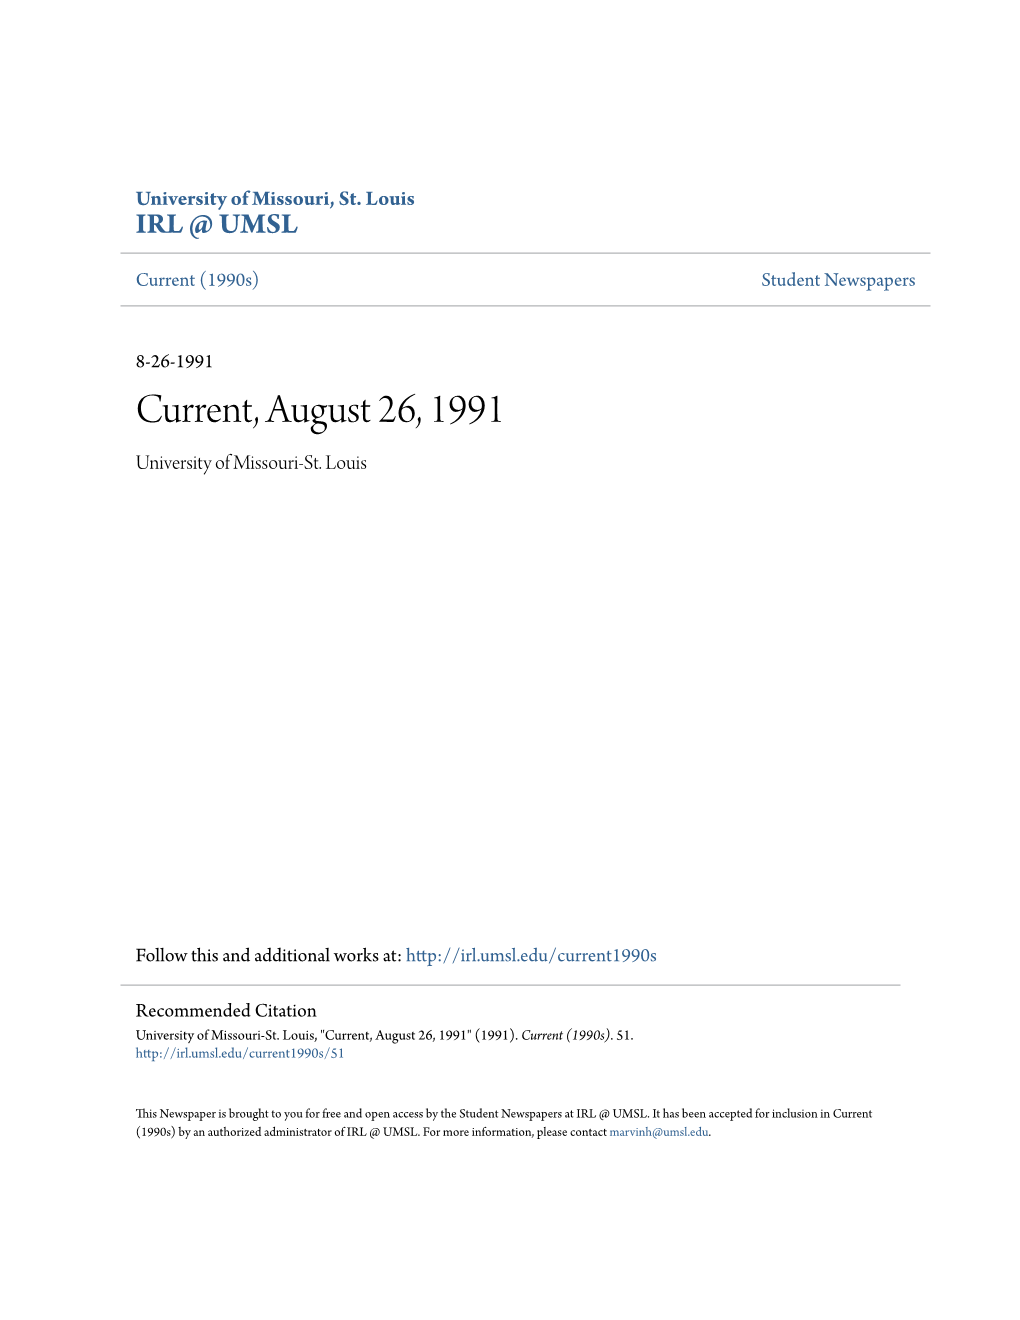 Current, August 26, 1991 University of Missouri-St